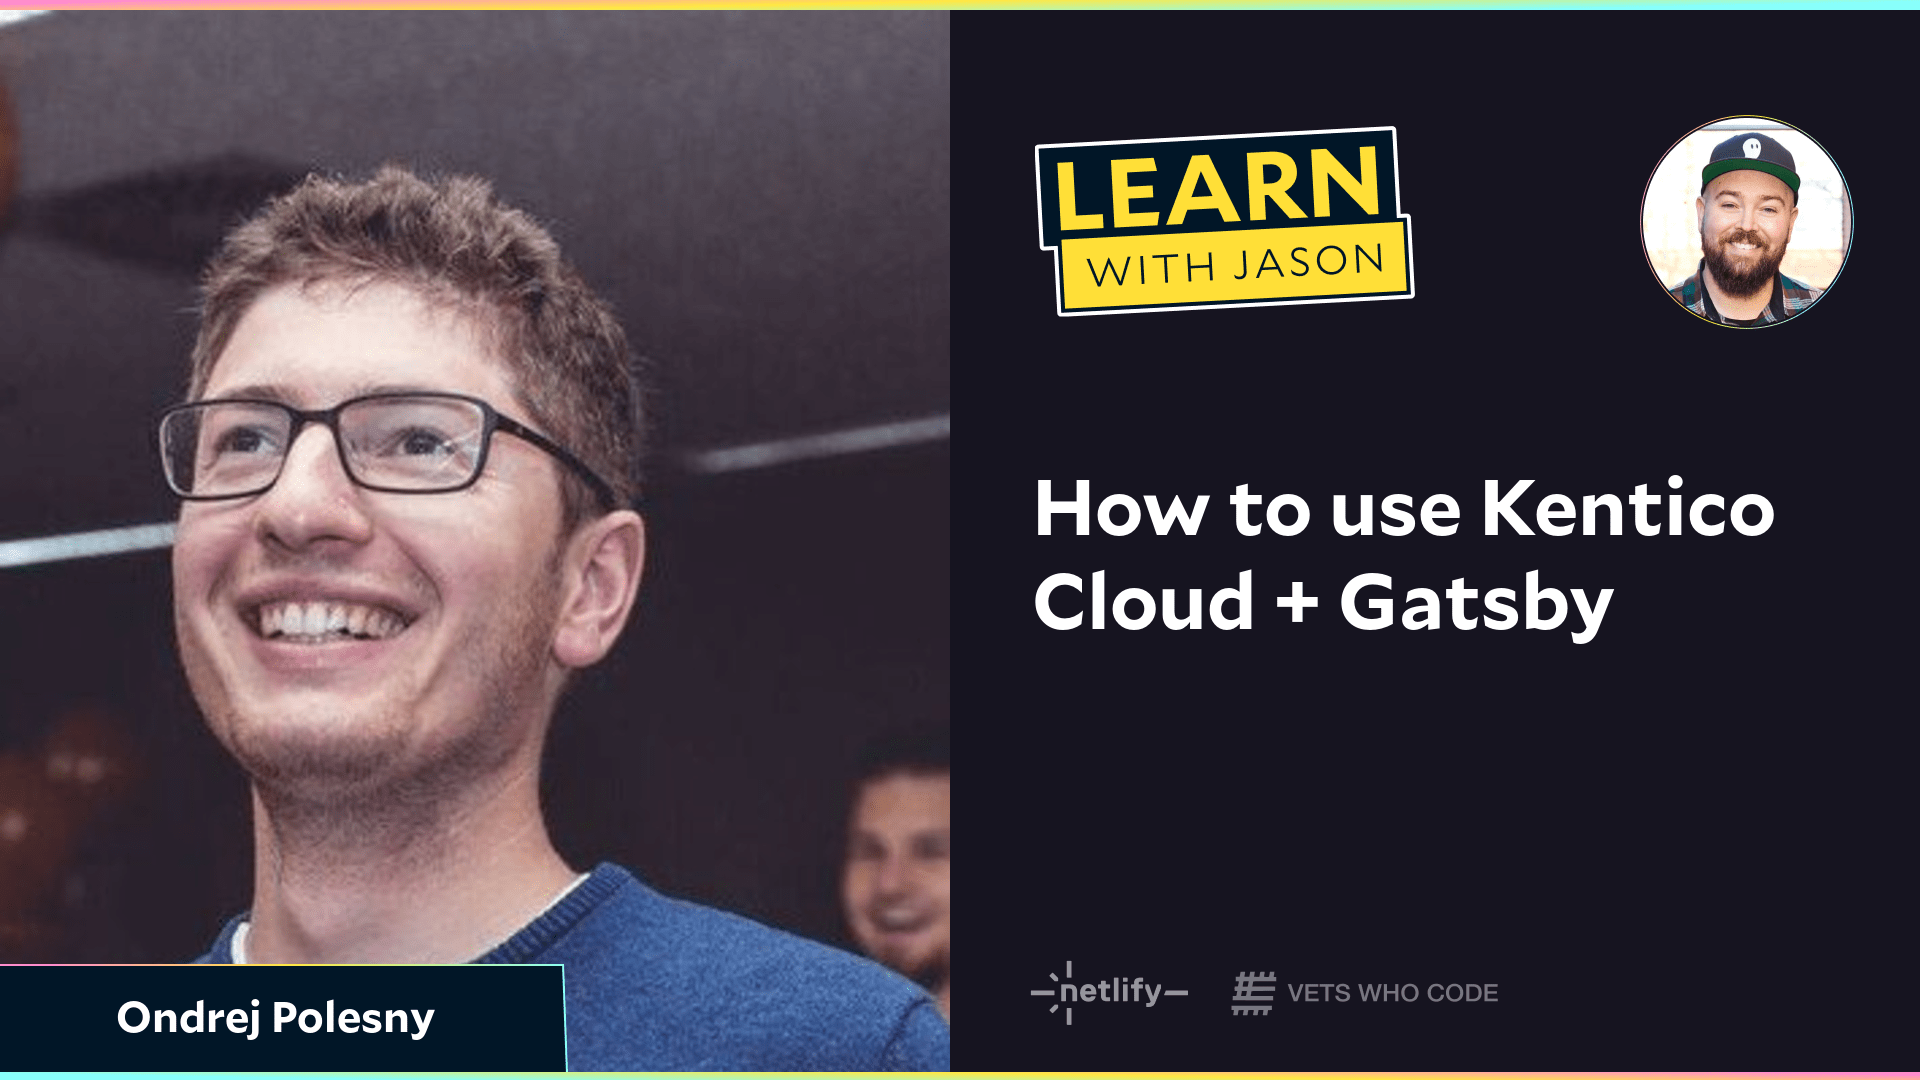 How to use Kentico Cloud + Gatsby (with Ondrej Polesny)